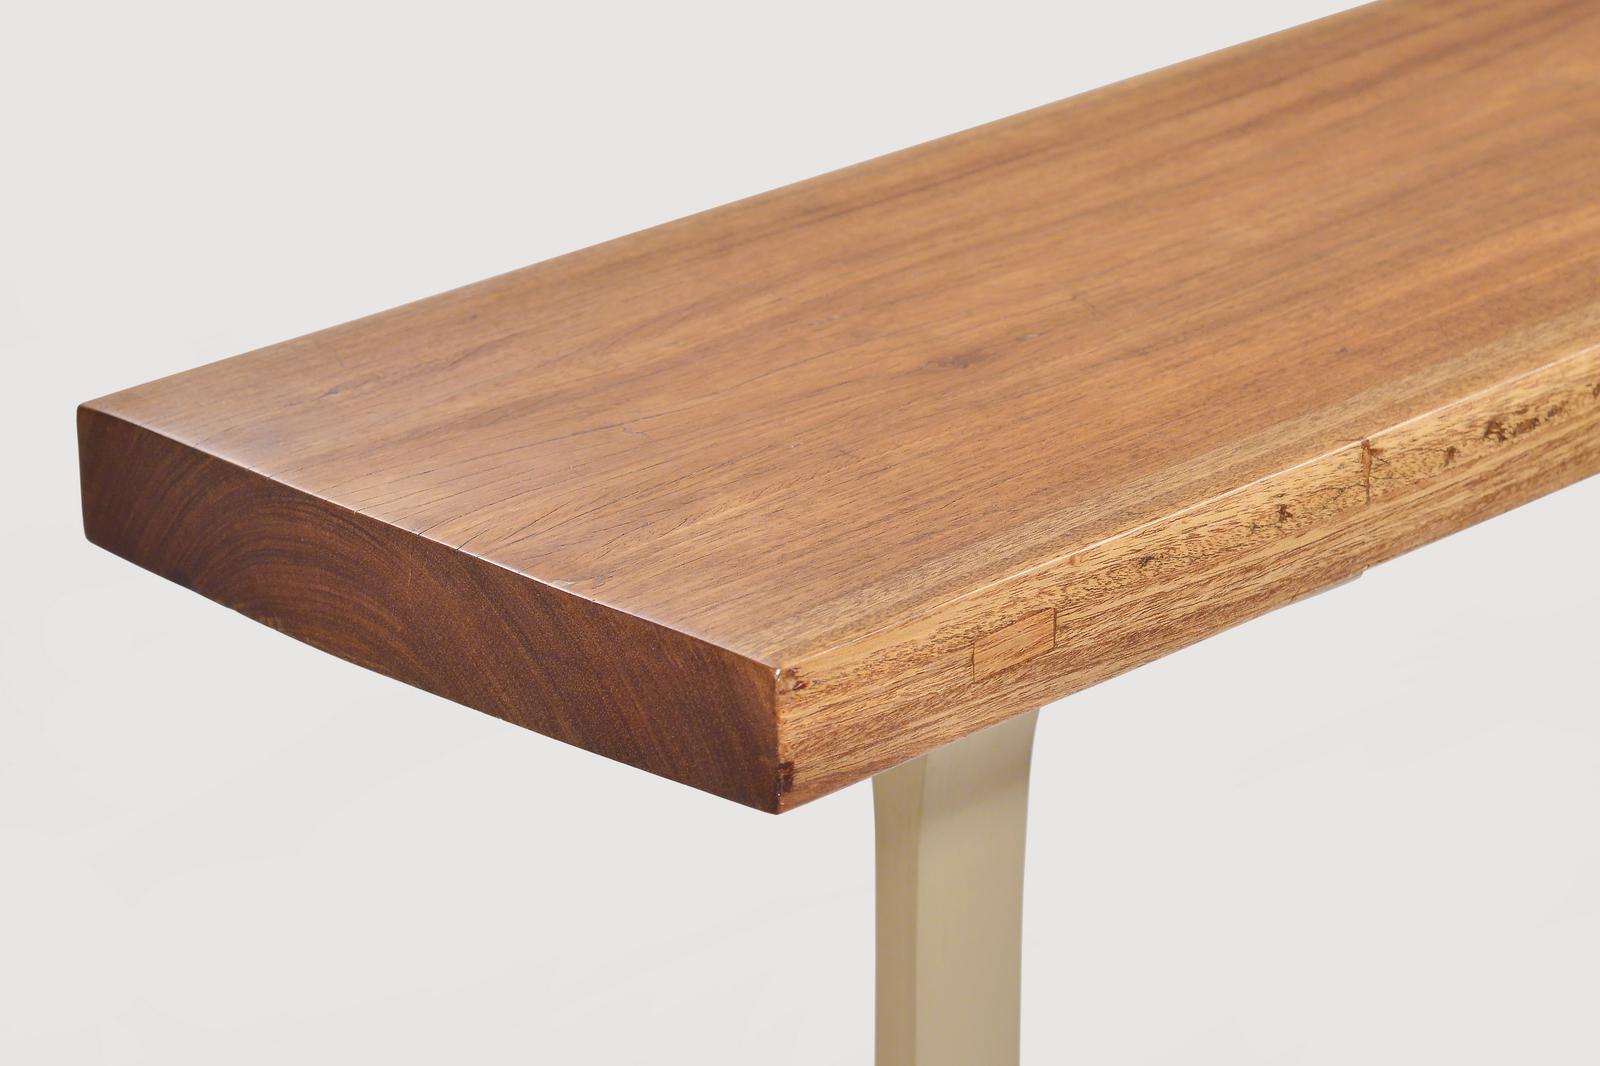 Minimalist Bespoke Side Table, Reclaimed Hardwood, Sand Cast Brass Base by P. Tendercool For Sale